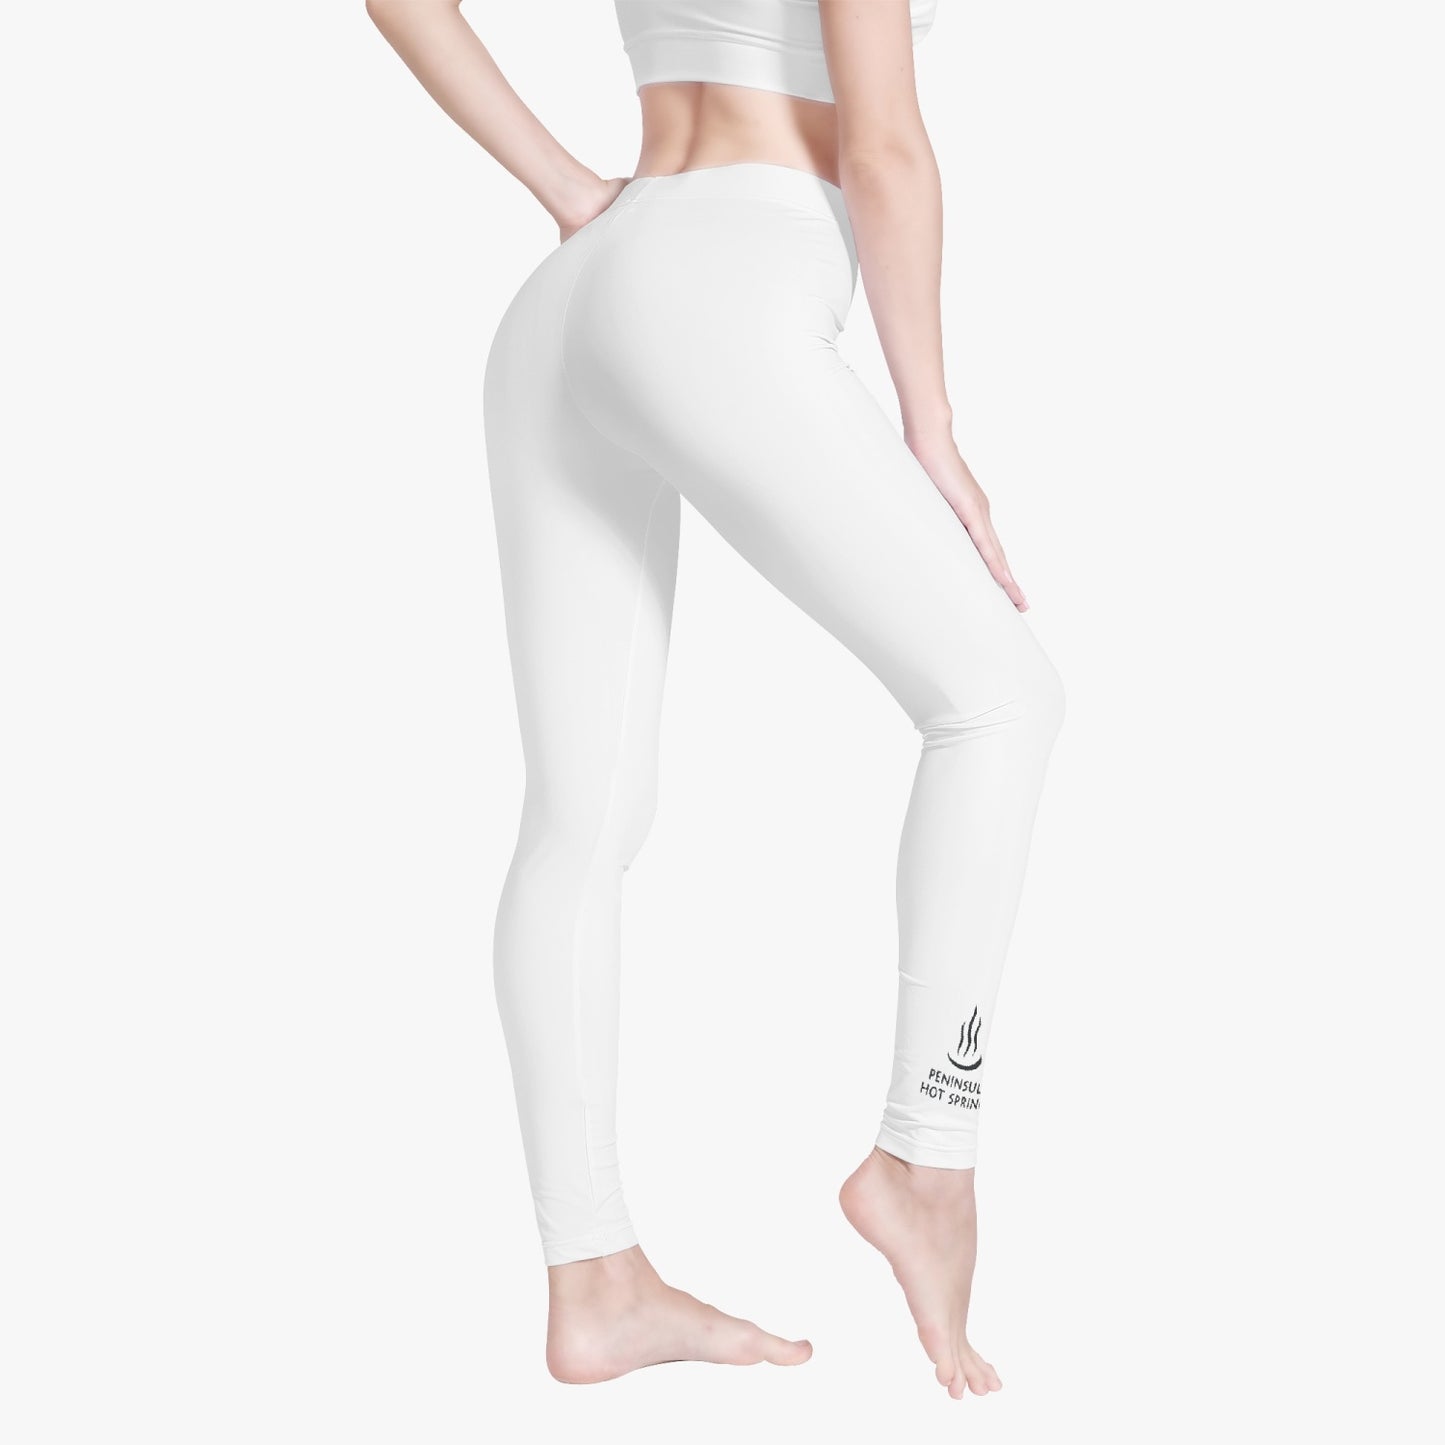 PENINSULAR HOT SPRINGS Women's Yoga Pants - white